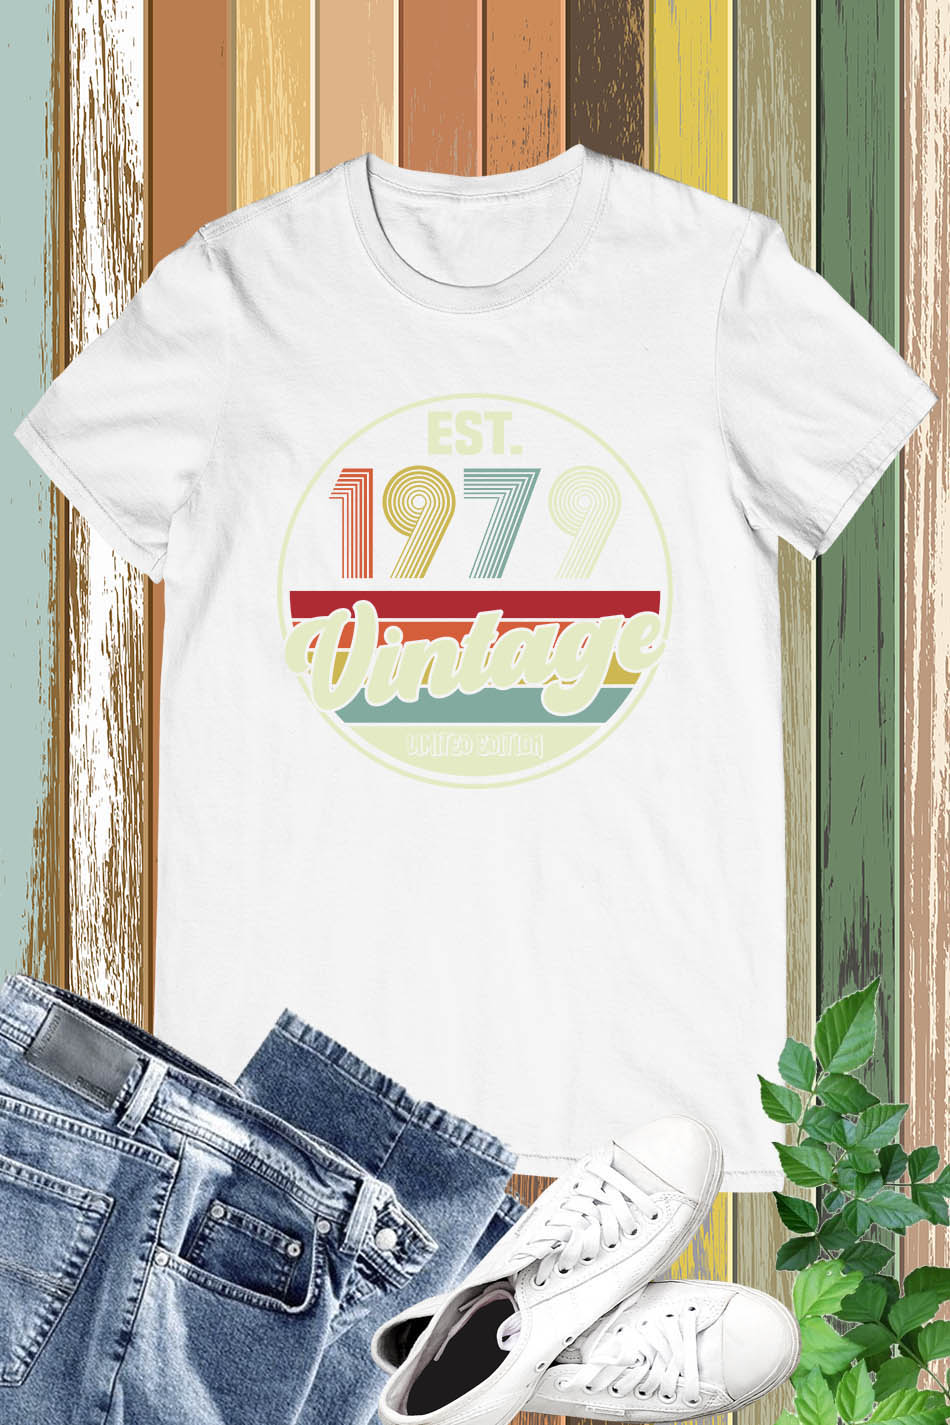 Est 1979 45th Birthday Shirt